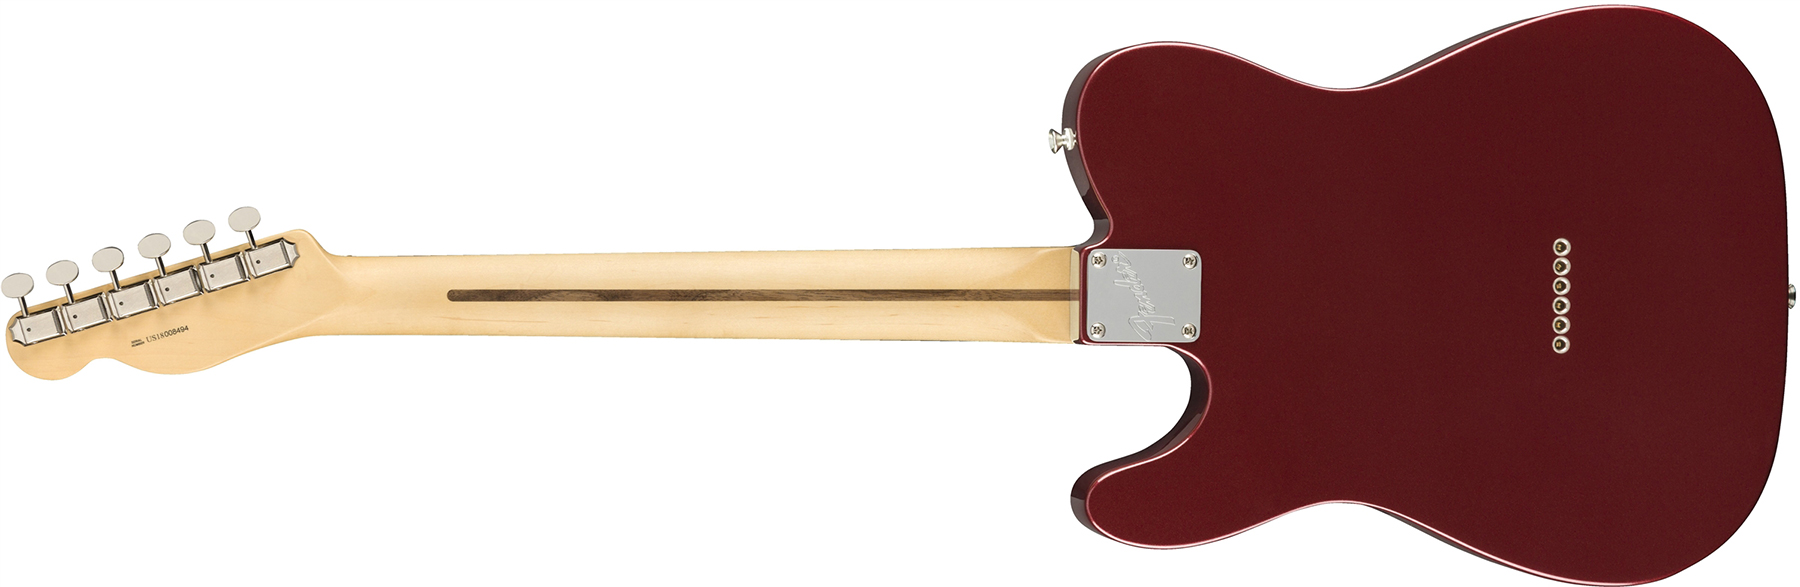 Fender Tele American Performer Hum Usa Sh Rw - Aubergine - Guitarra eléctrica con forma de tel - Variation 1